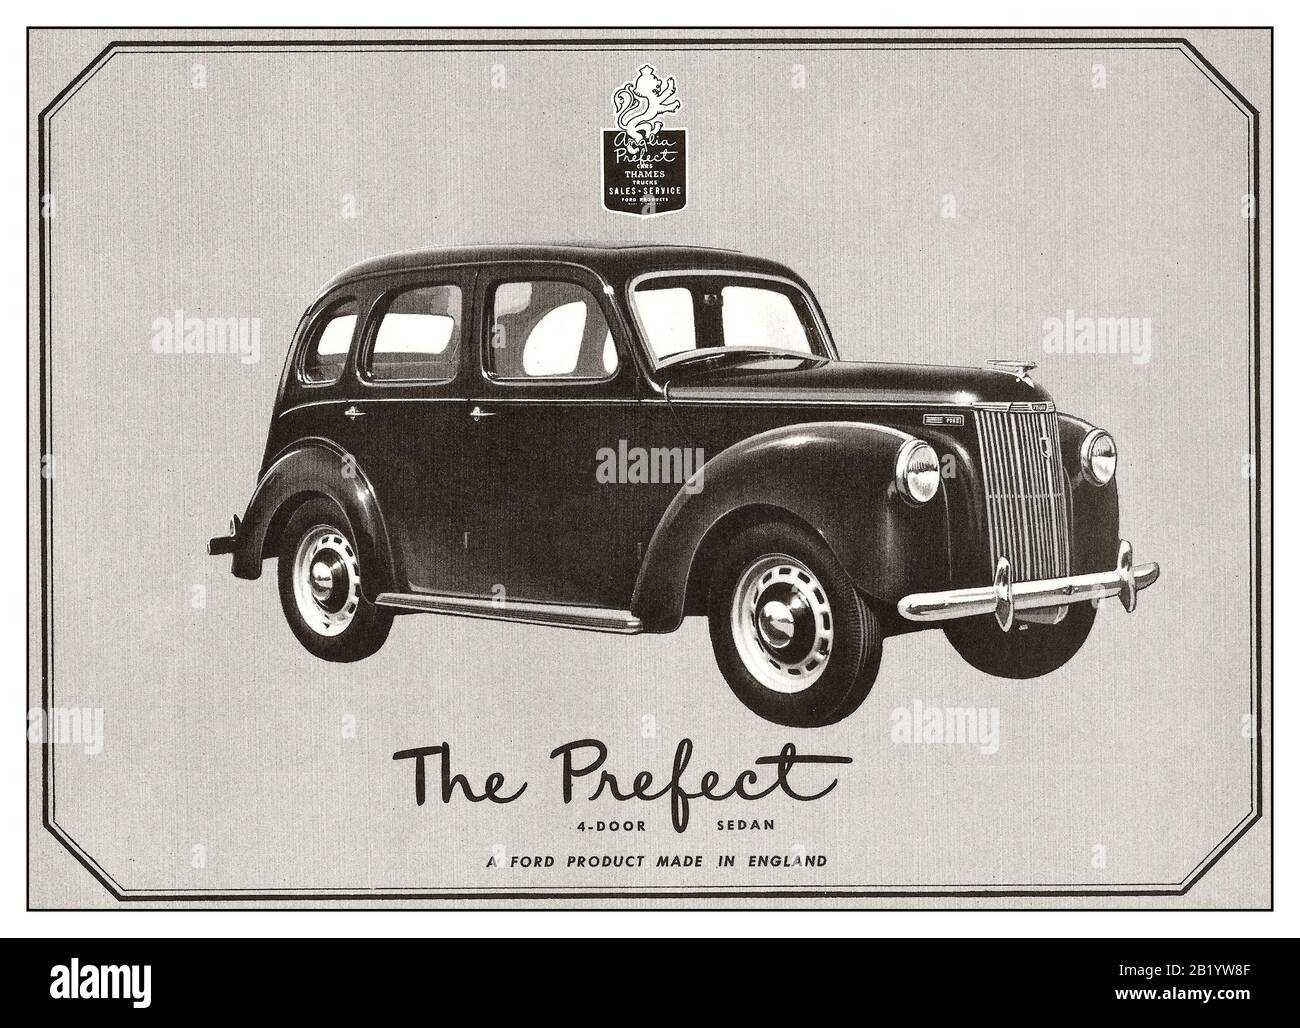 Vintage British made car Advertisement Illustration The Prefect Ford 1950 motor car 4 door sedan made in England Stock Photo